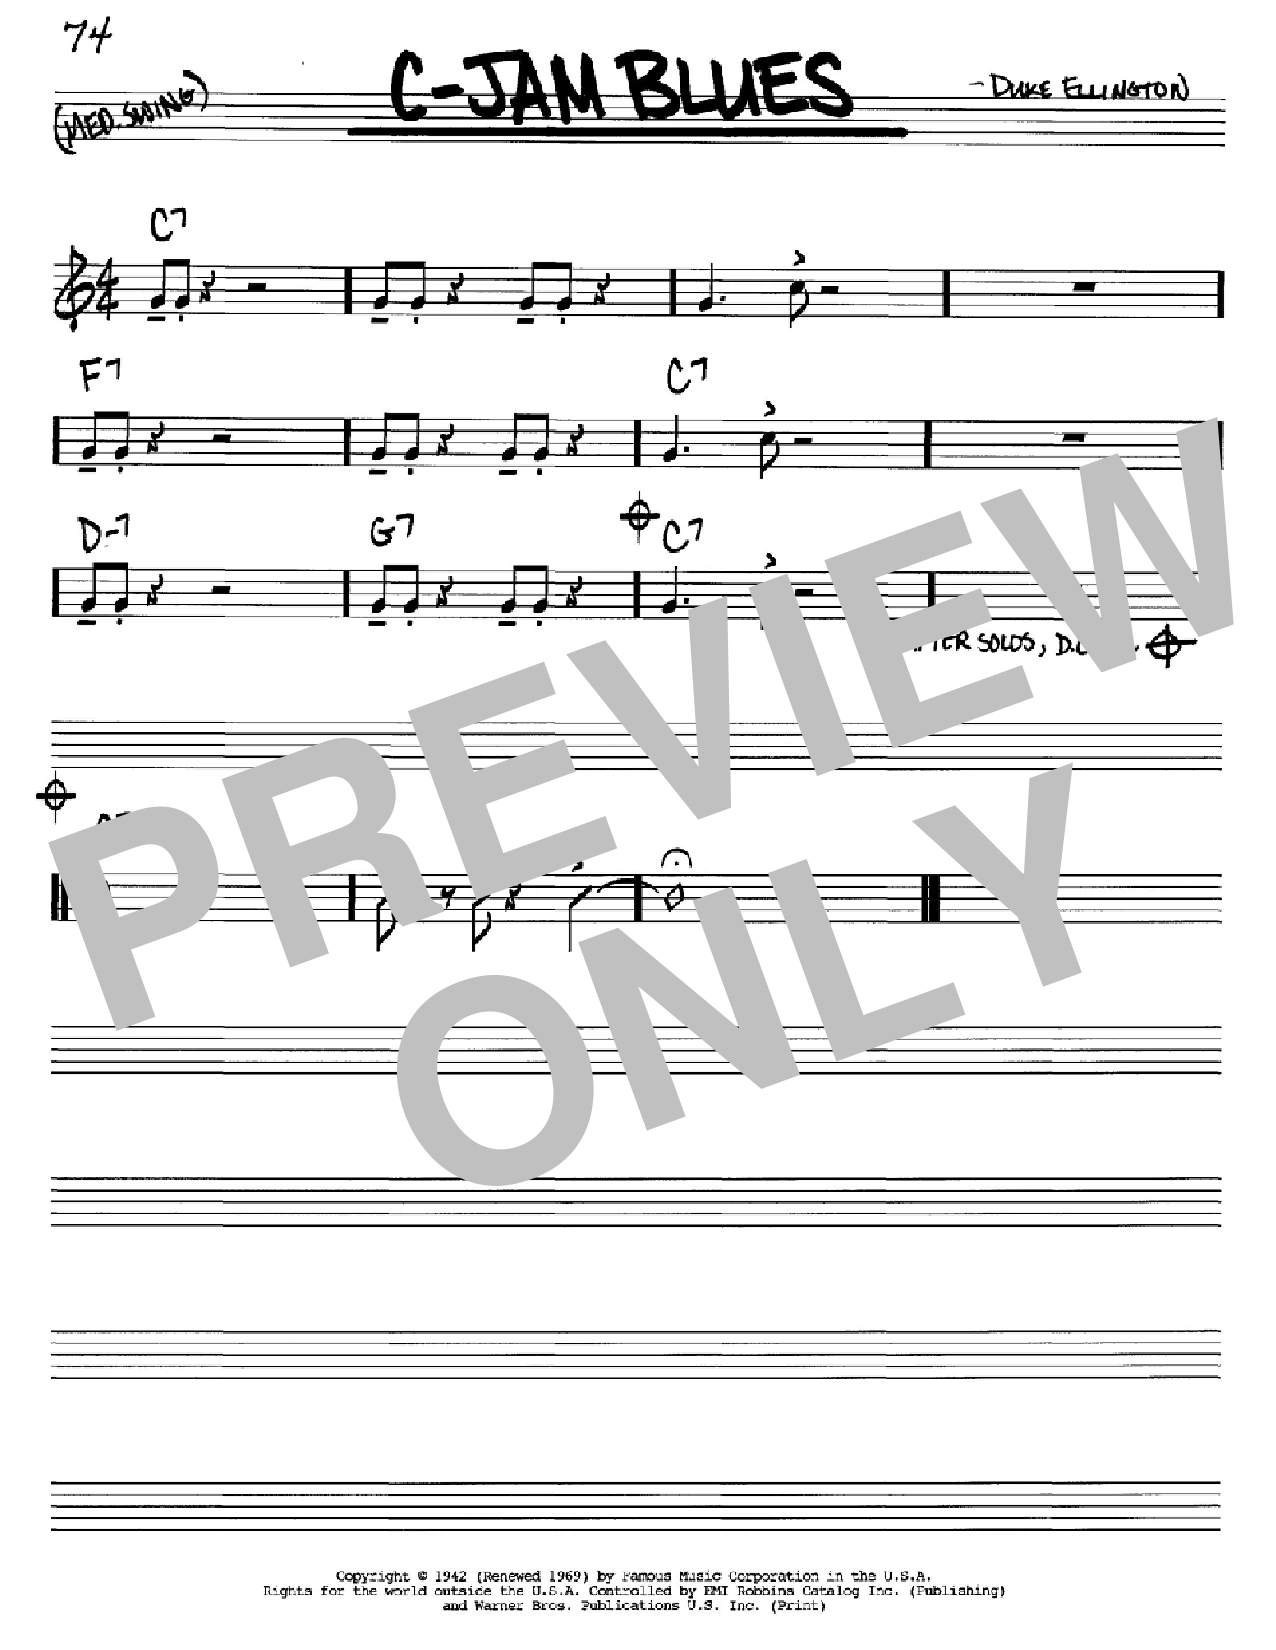 Duke Ellington C-Jam Blues Sheet Music Notes & Chords for Melody Line, Lyrics & Chords - Download or Print PDF